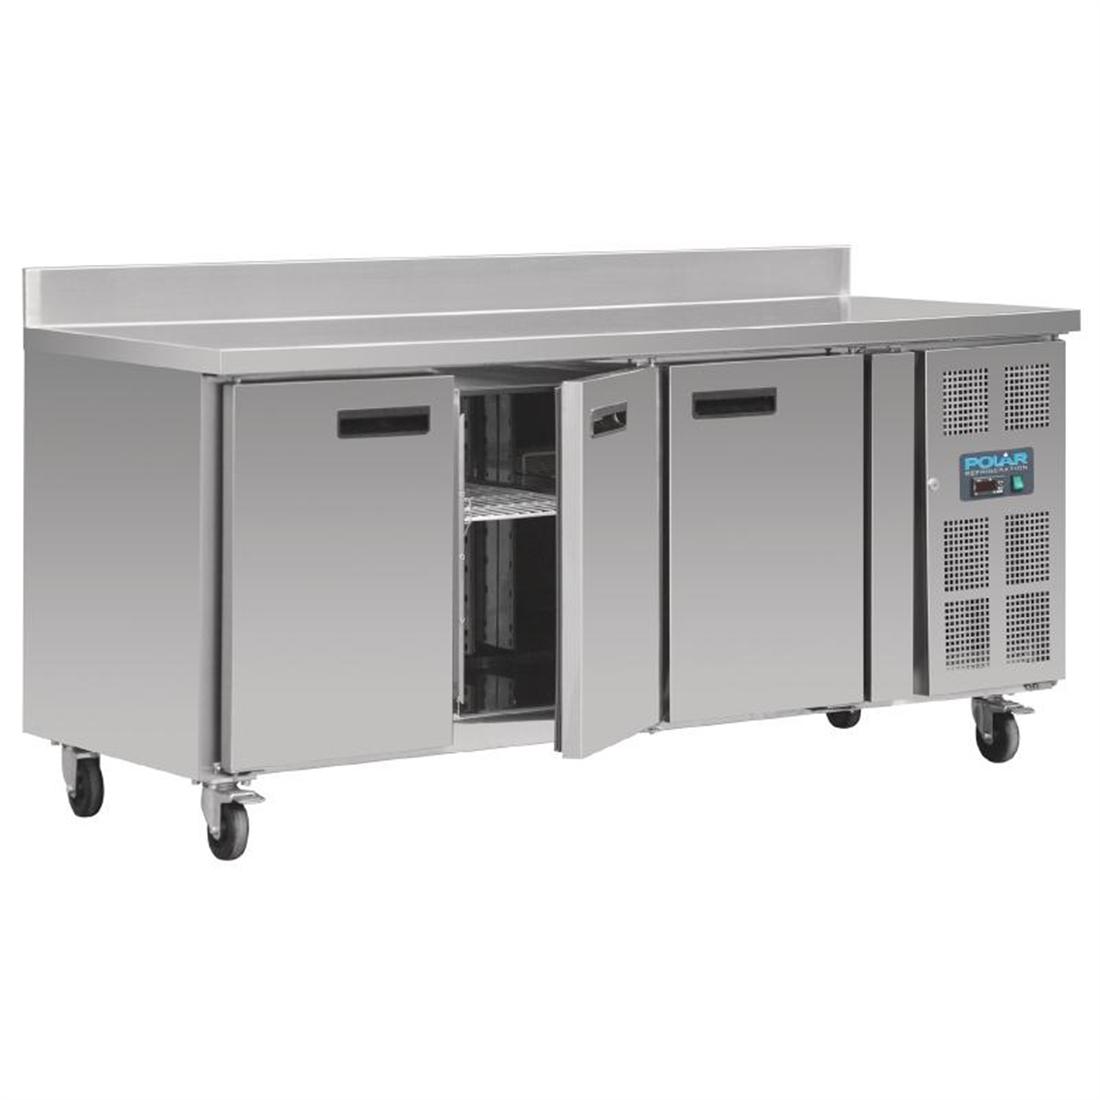 Polar U-Series Triple Door Counter Freezer with Upstand 417Ltr - DL917  - 4